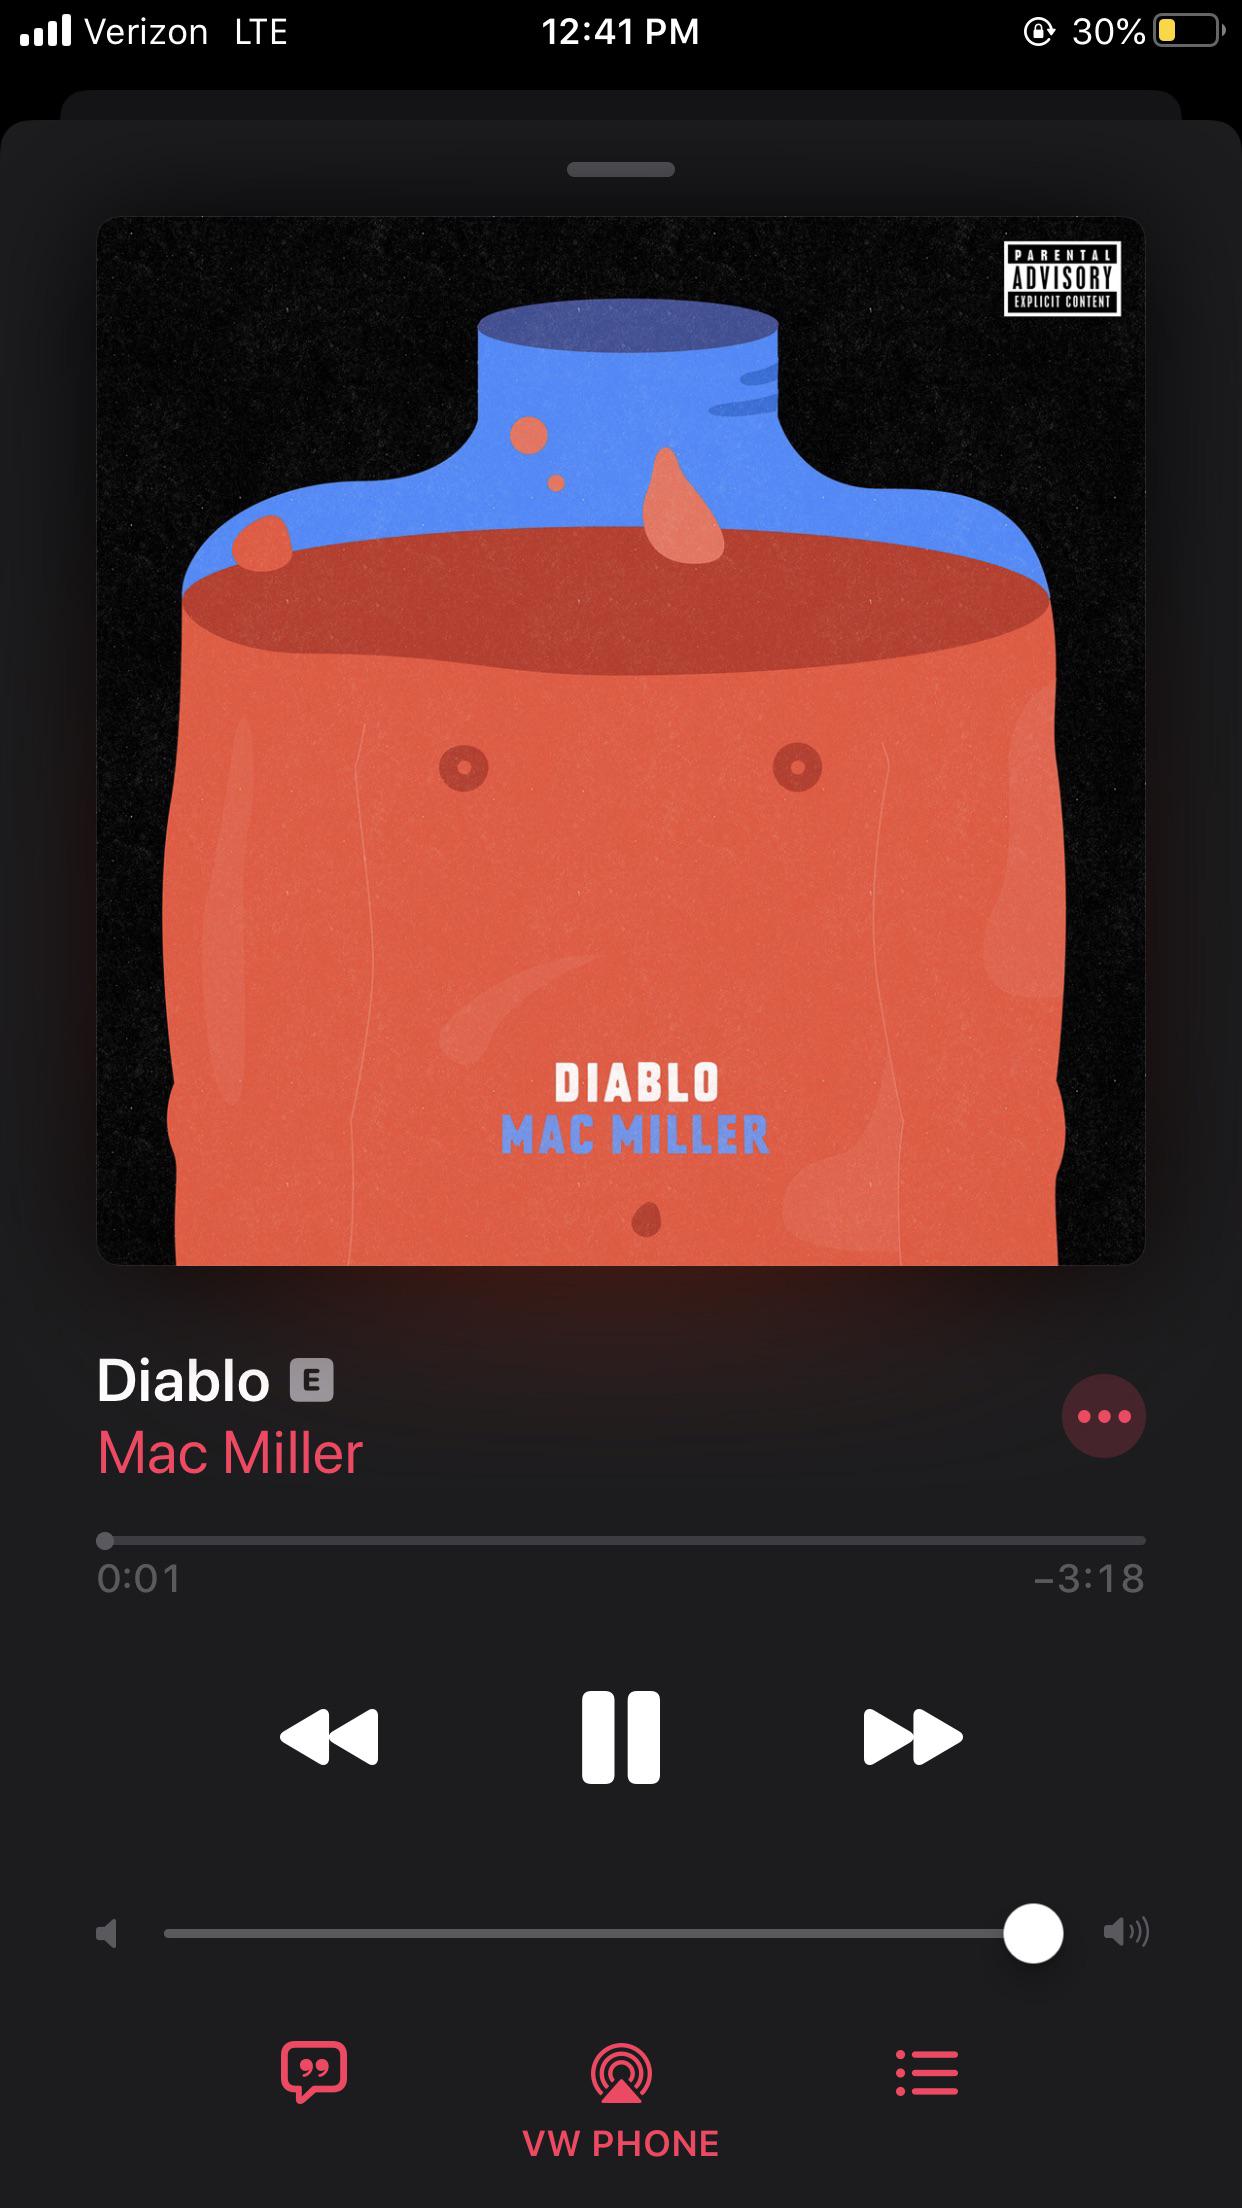 mac miller diablo download